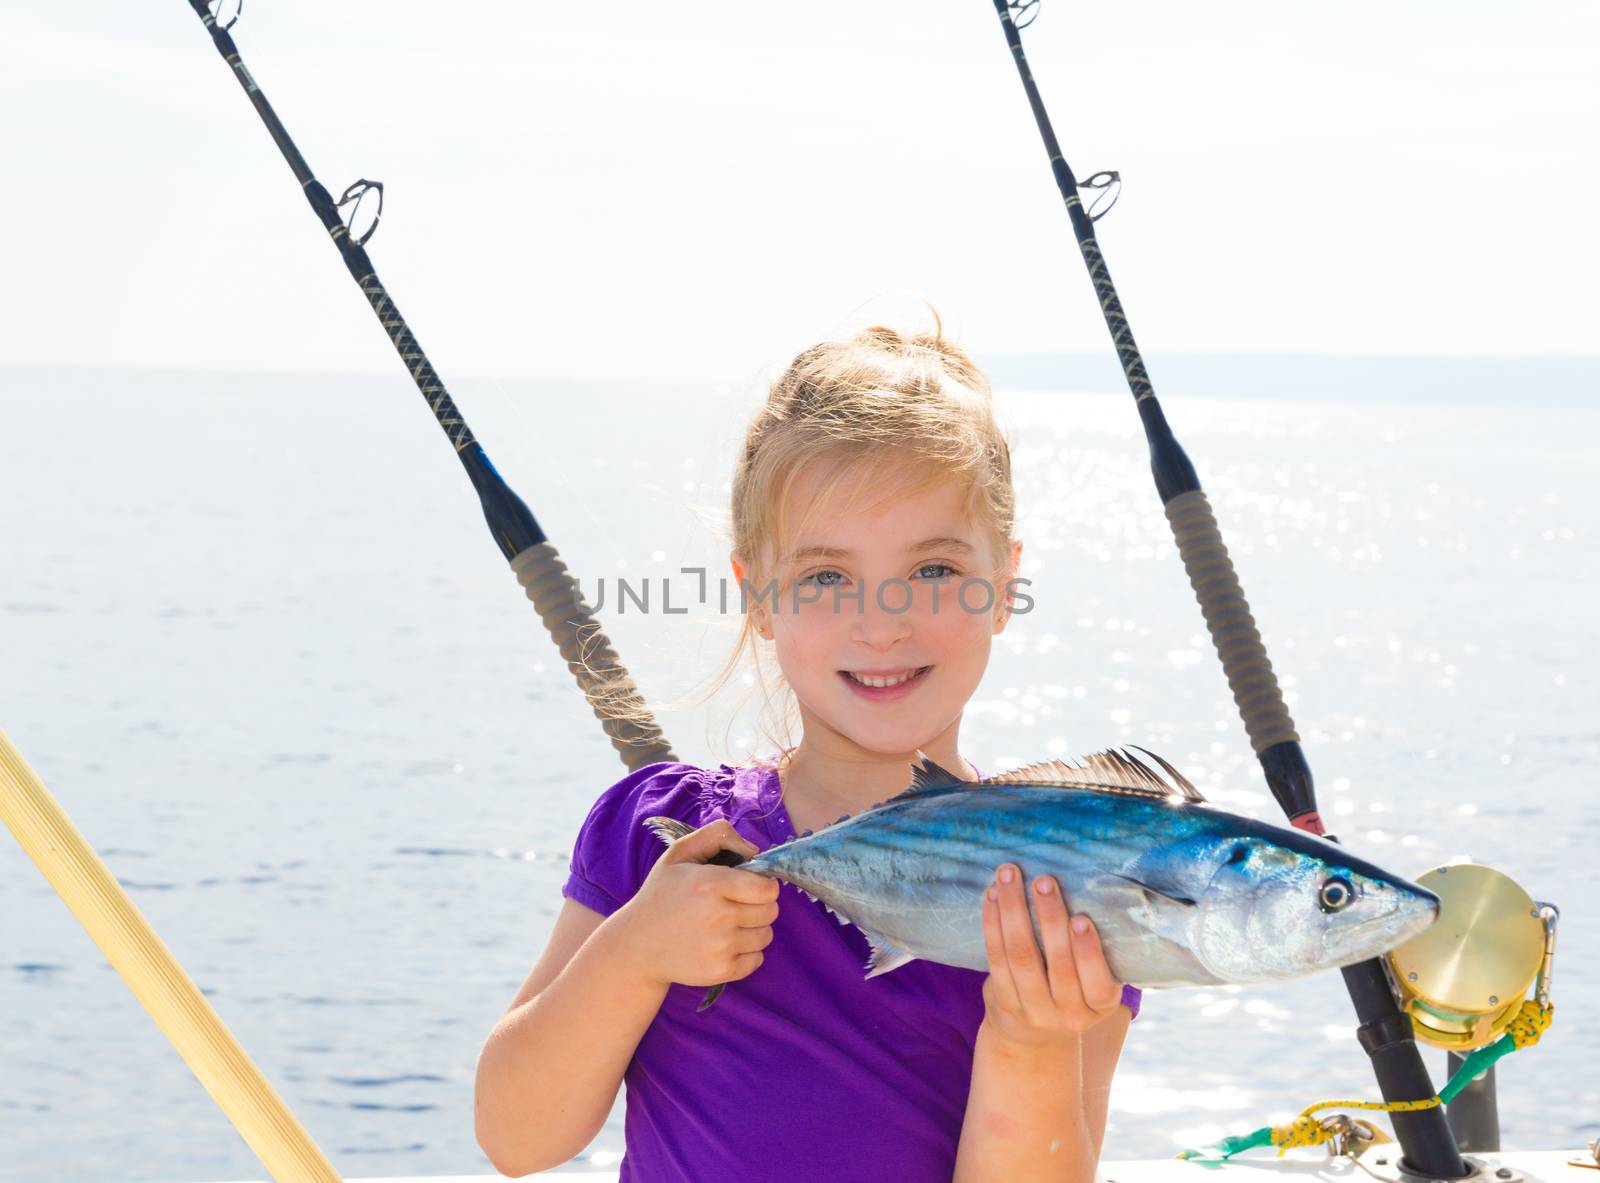 Blond girl fishing bonito Sarda tuna trolling in sea by lunamarina